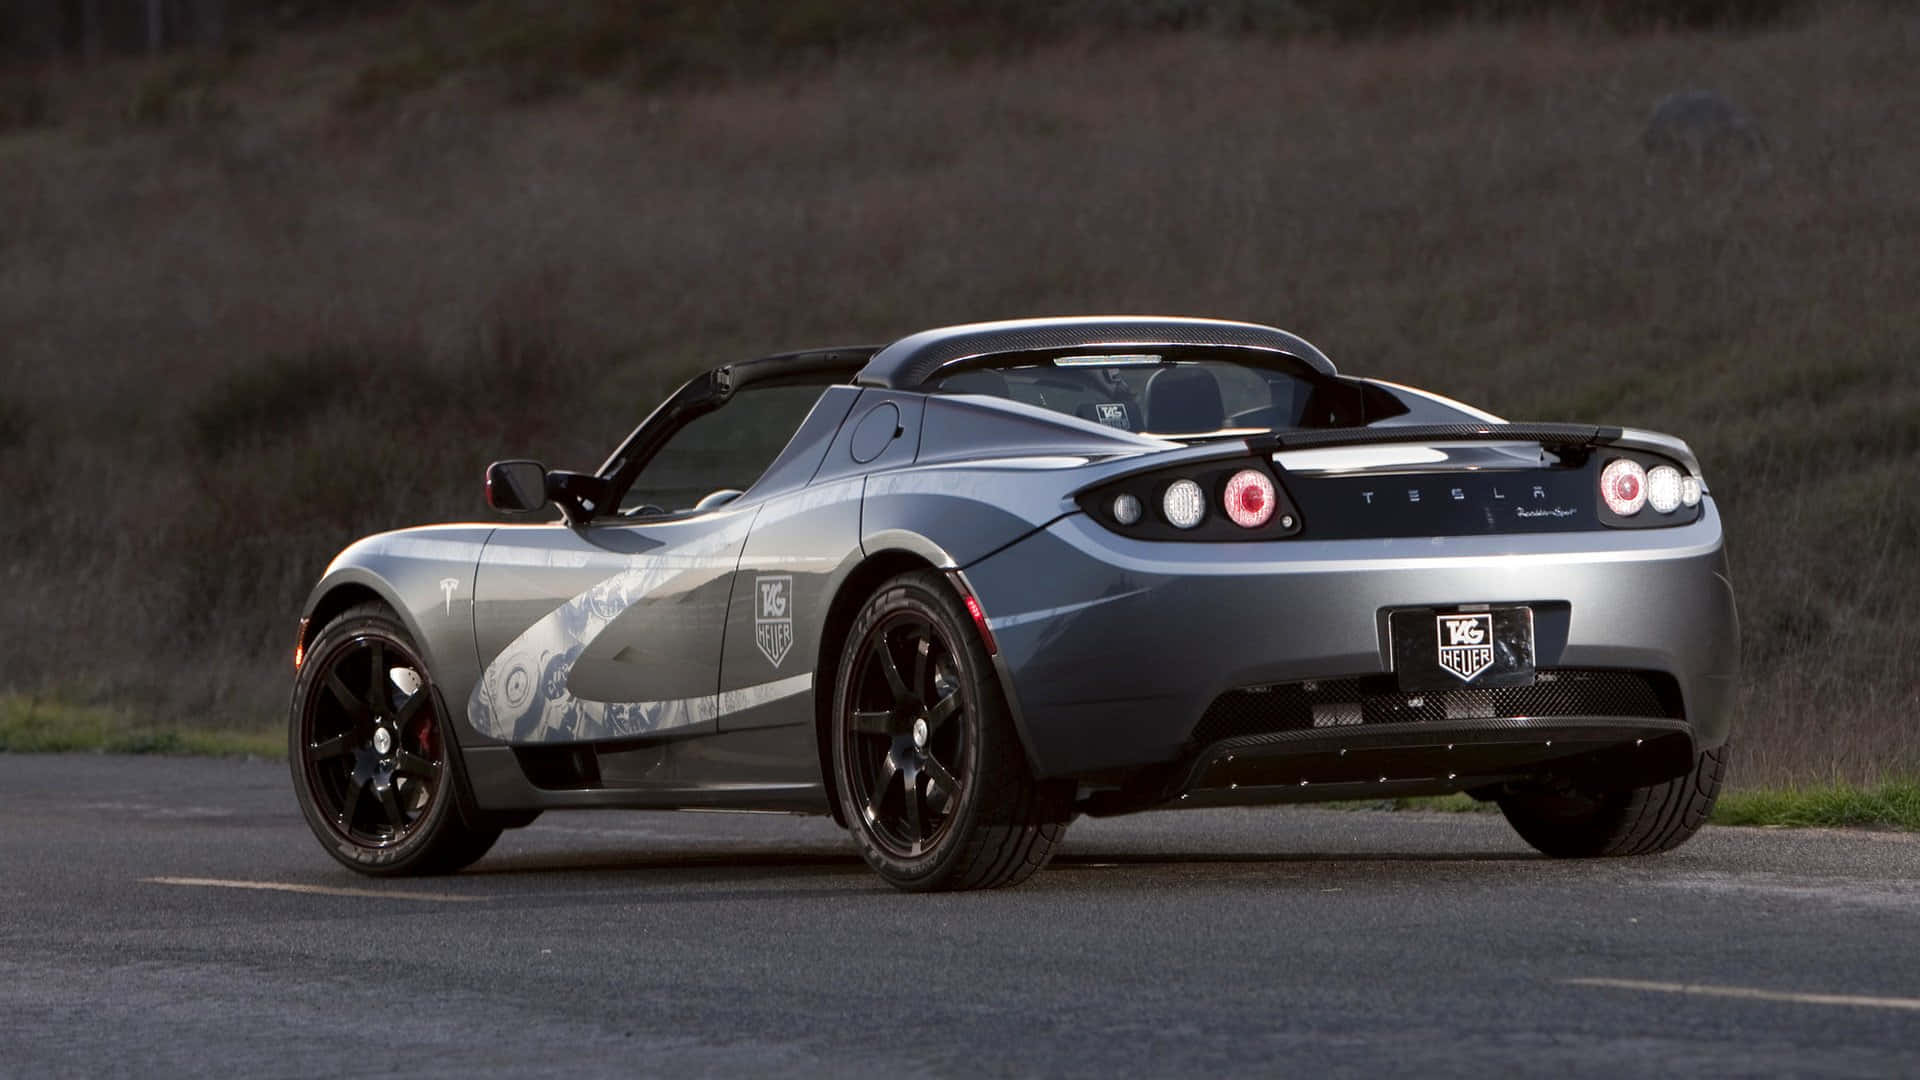 High-speed Luxury - The Tesla Roadster